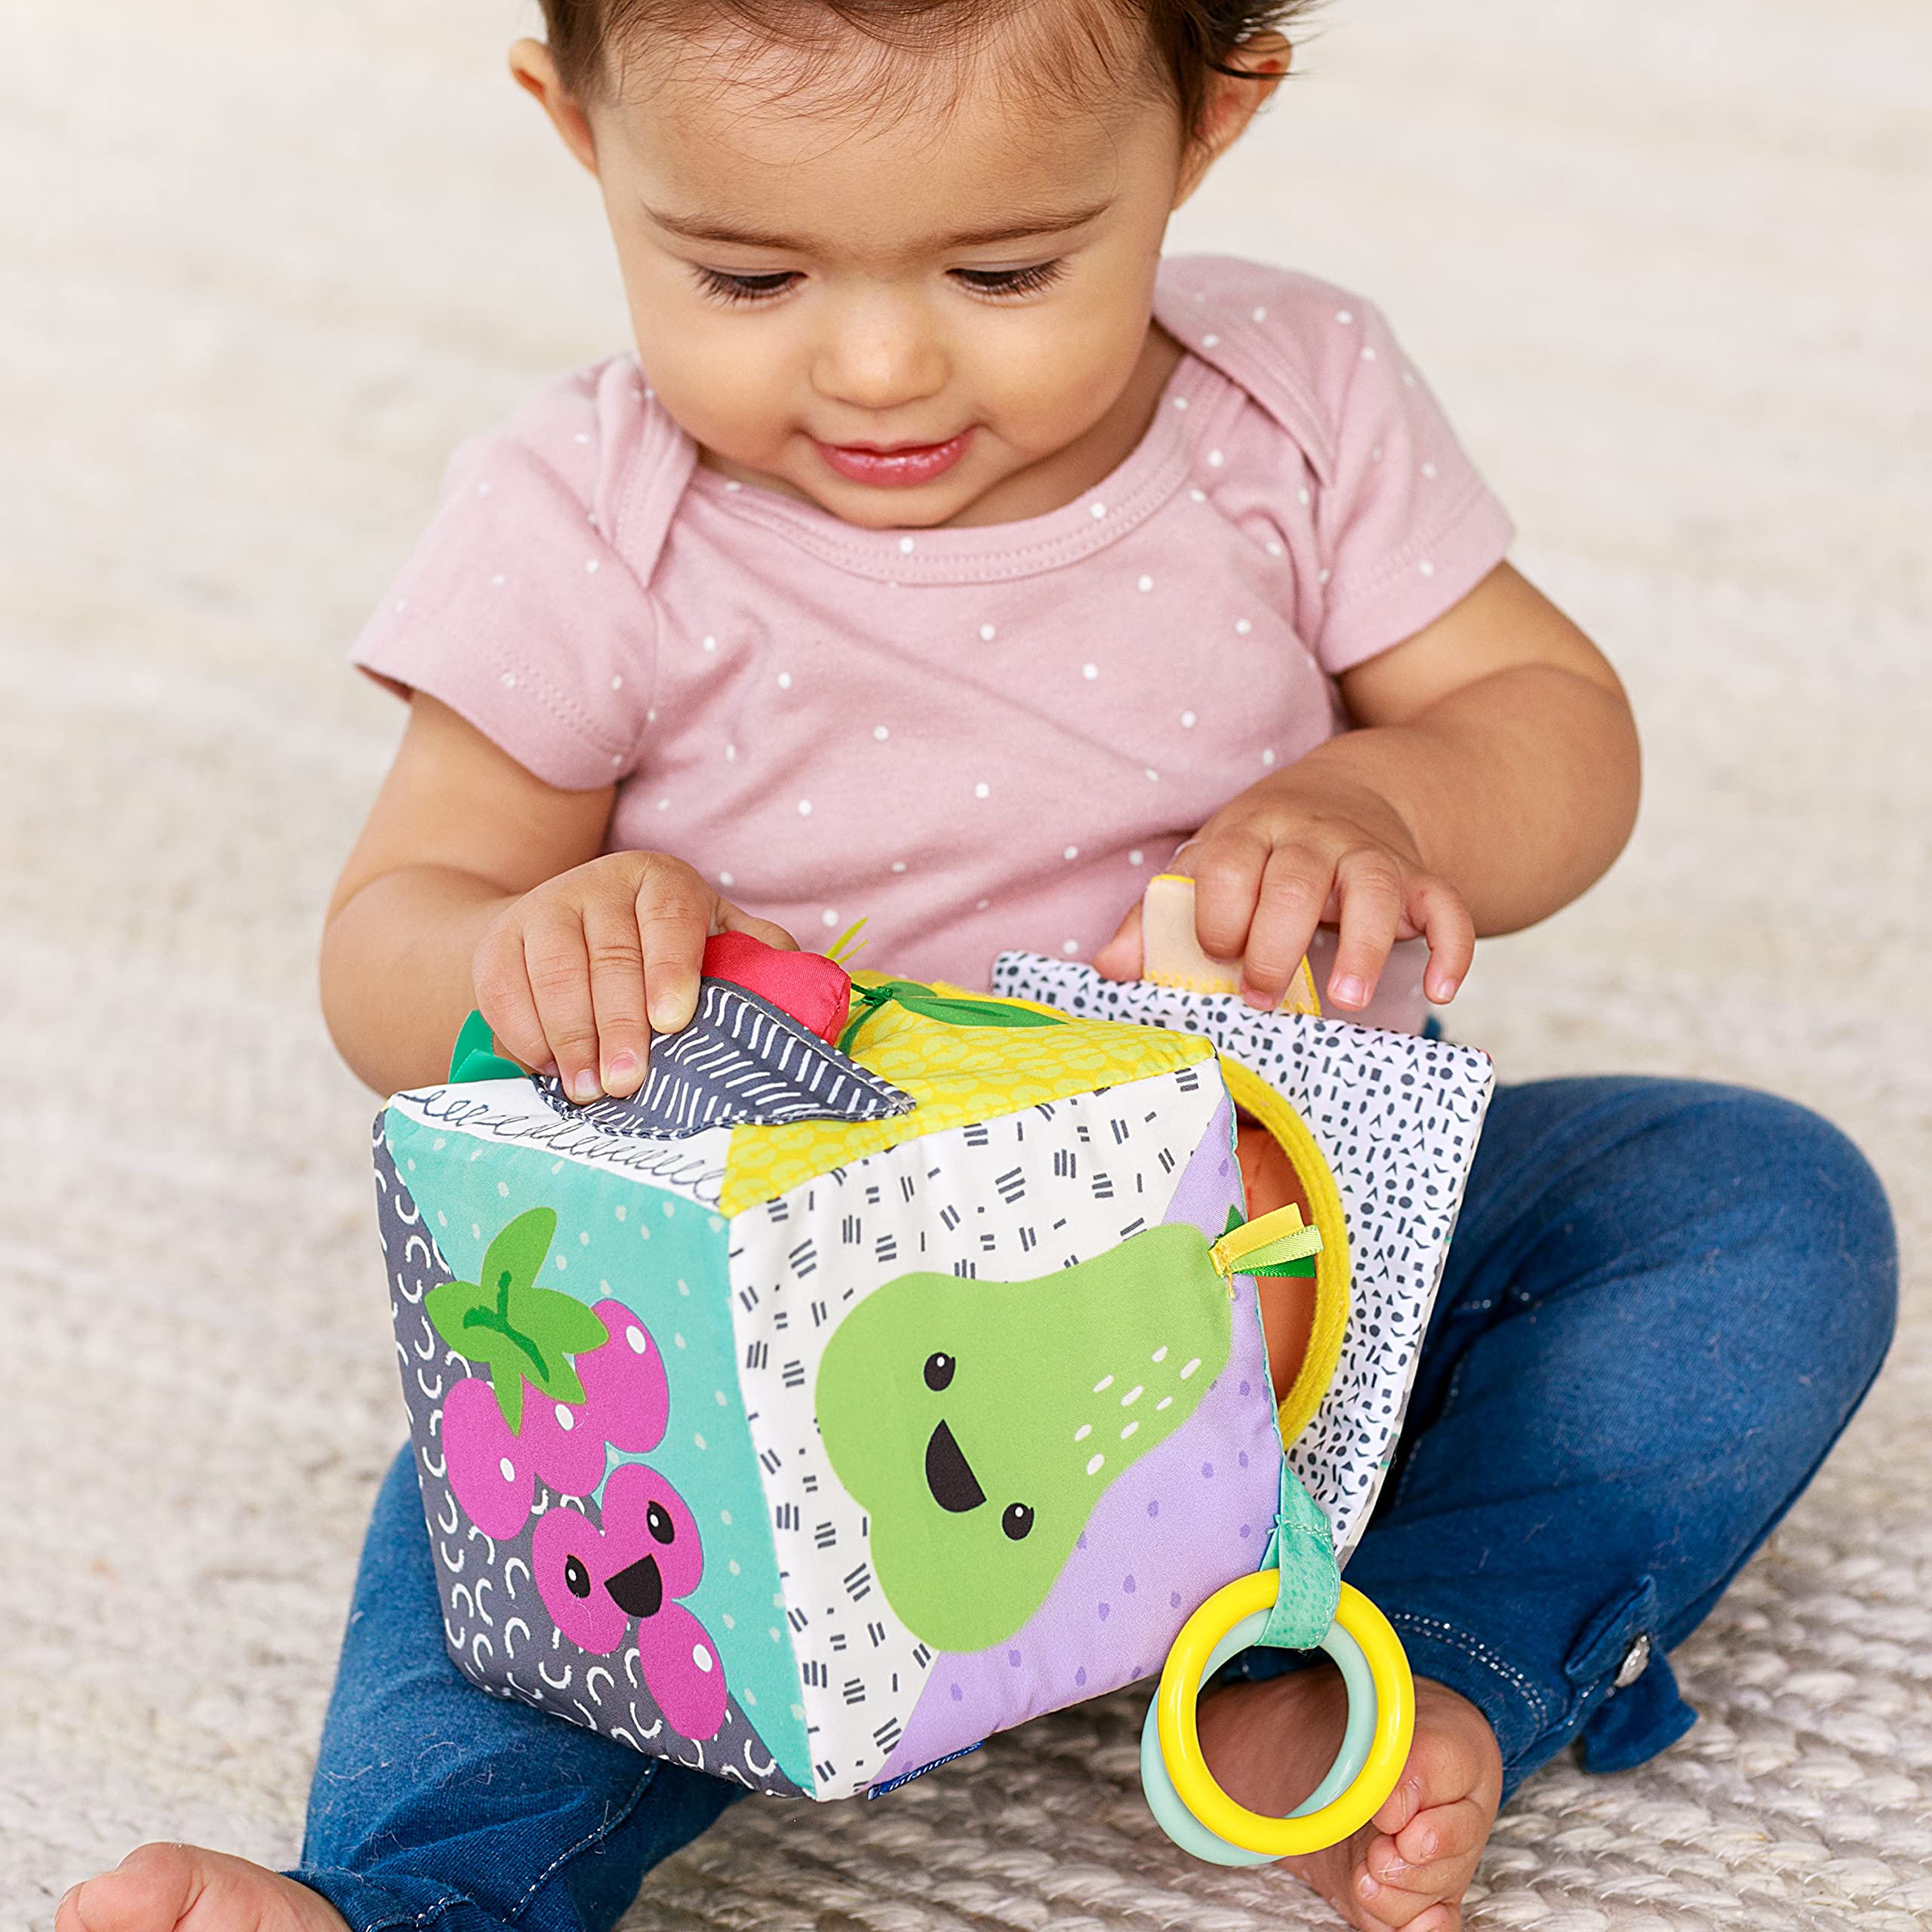 Infantino Peek & Seek Sensory Discovery Cube, Selfie Mirror, Early Fine Motor Skills Development, for Infants & Toddlers 3M+